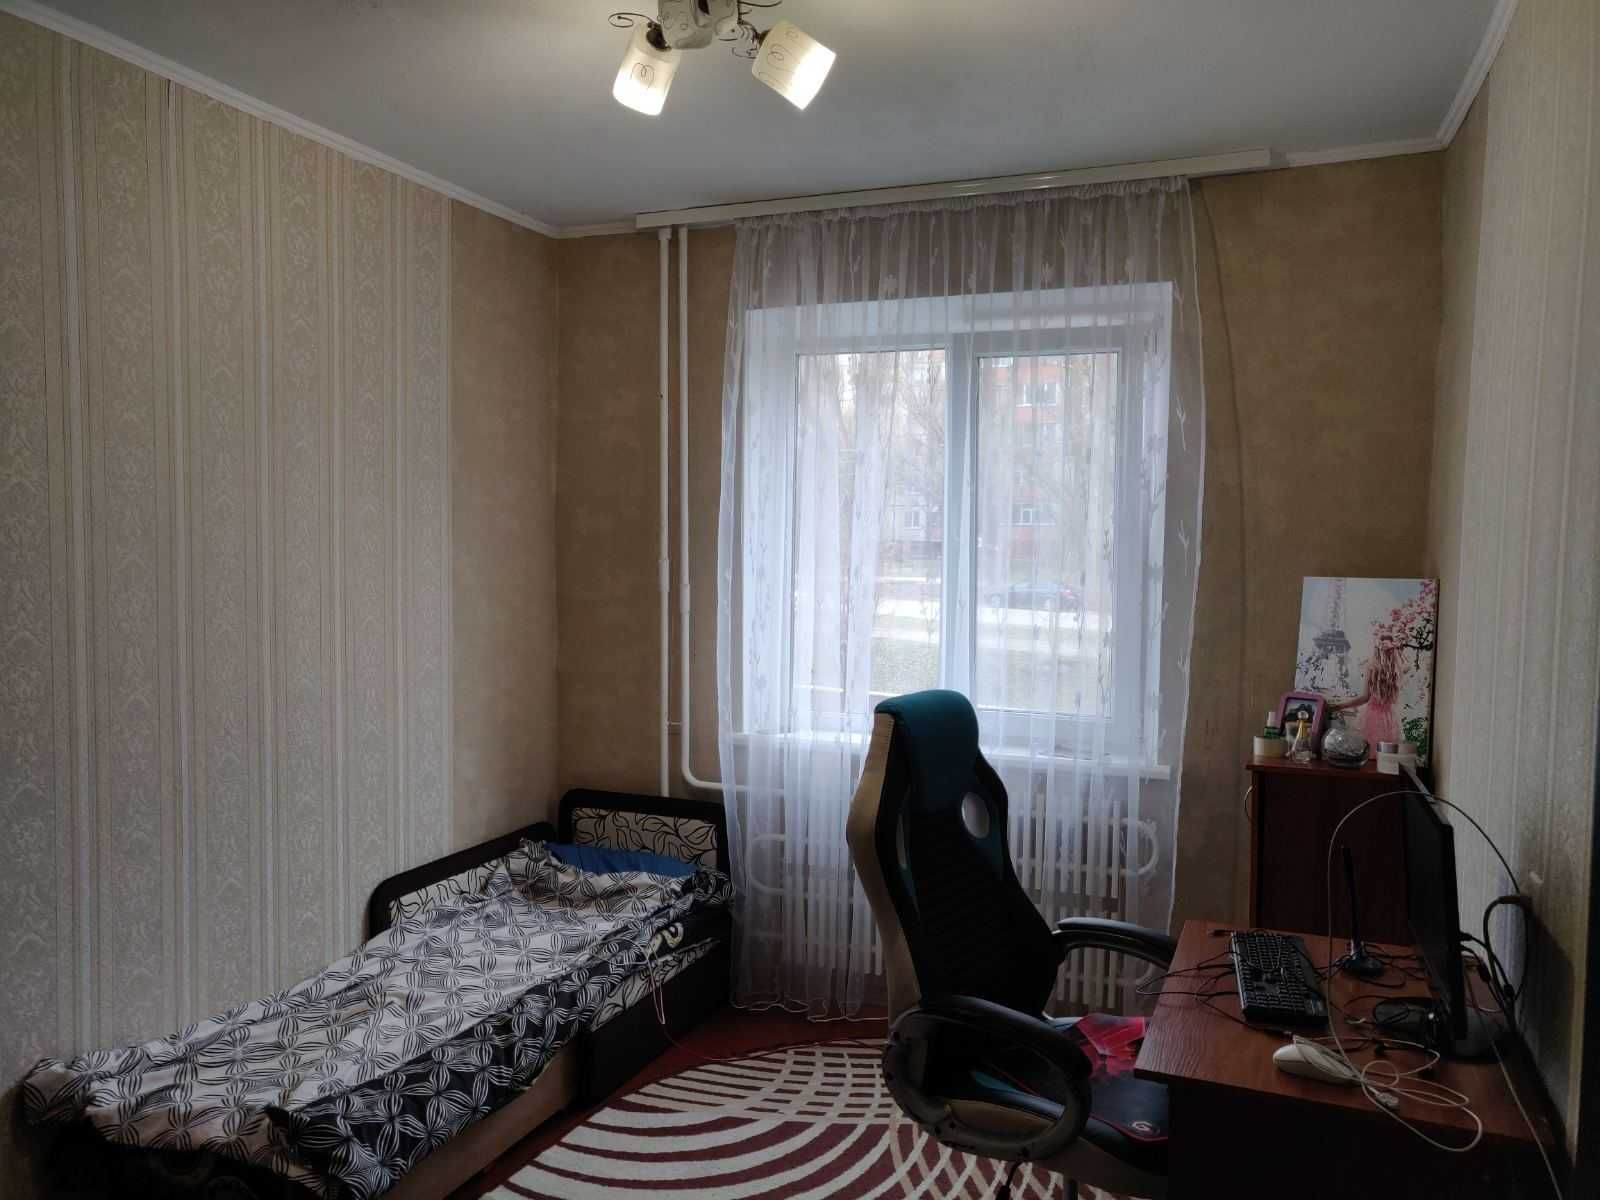 Продам срочно недорого 3 х квартиру  в Осипенковском районе